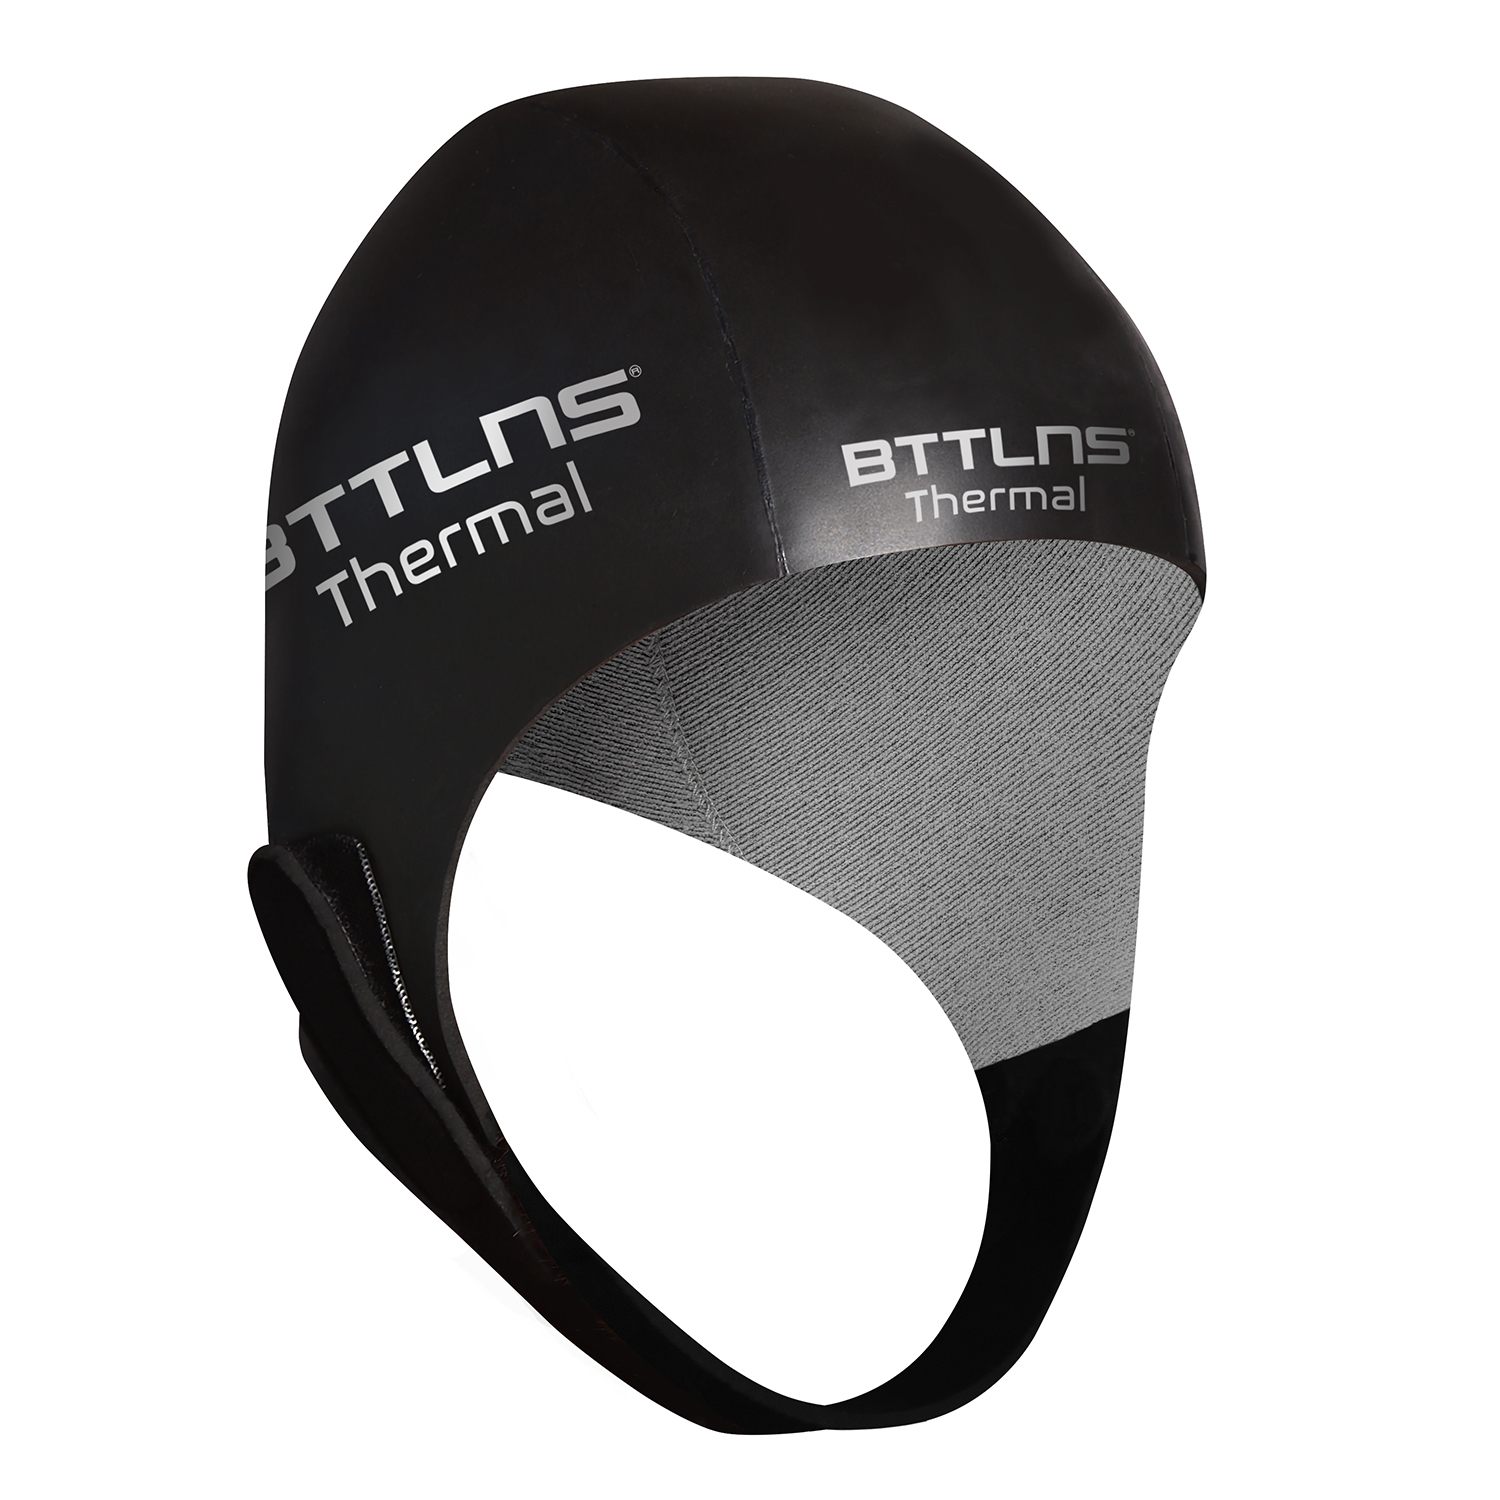 BTTLNS Neoprene thermal swim cap Zethes 1.0 silver  0121015-097